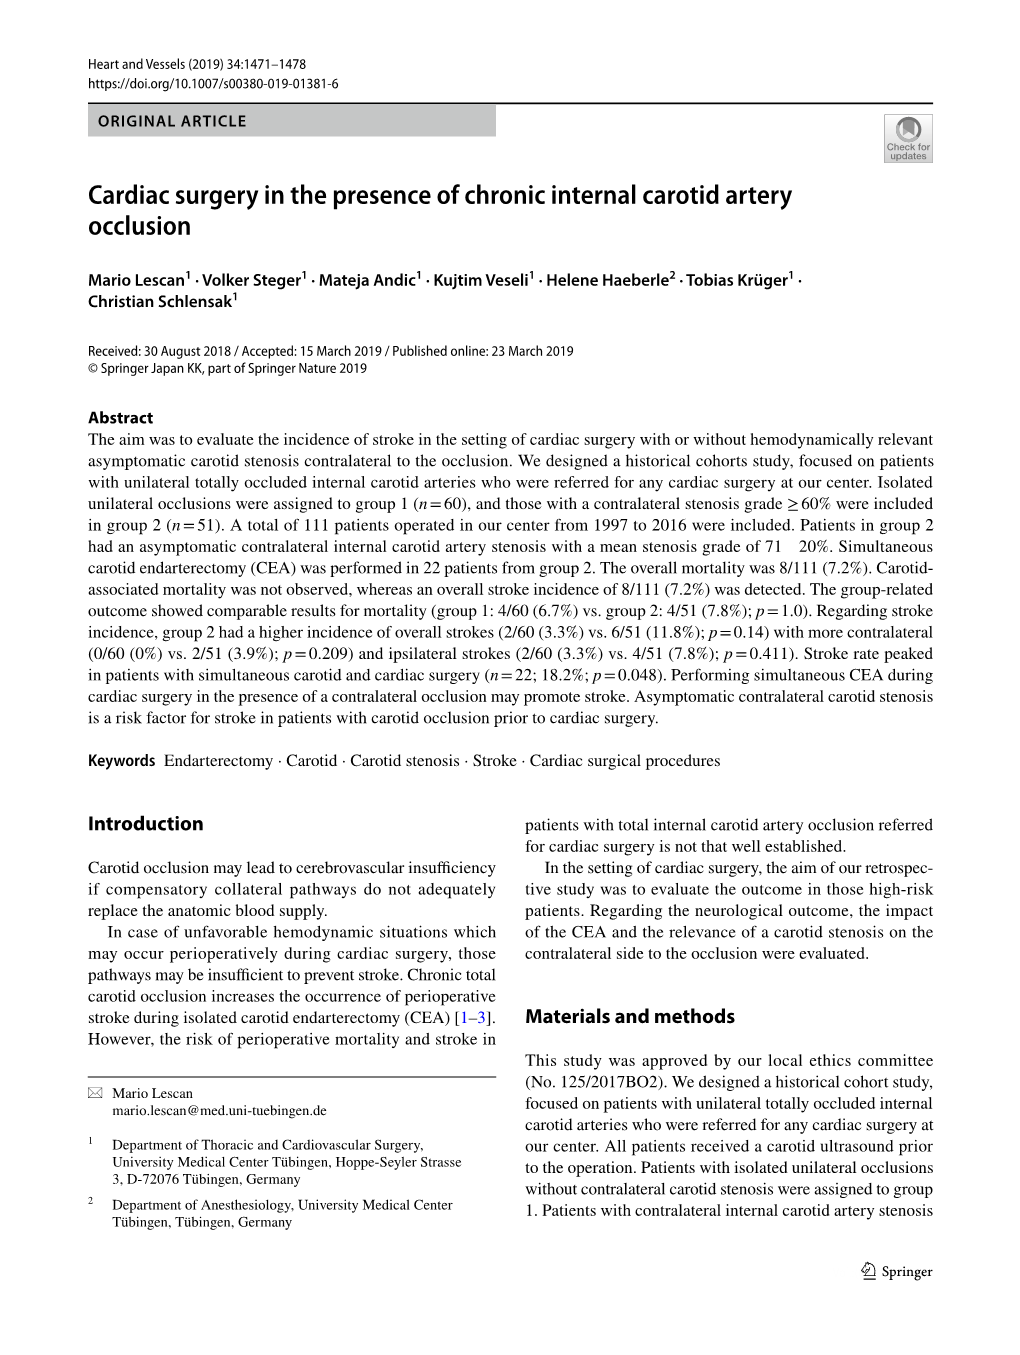 Cardiac Surgery in the Presence of Chronic Internal Carotid Artery Occlusion